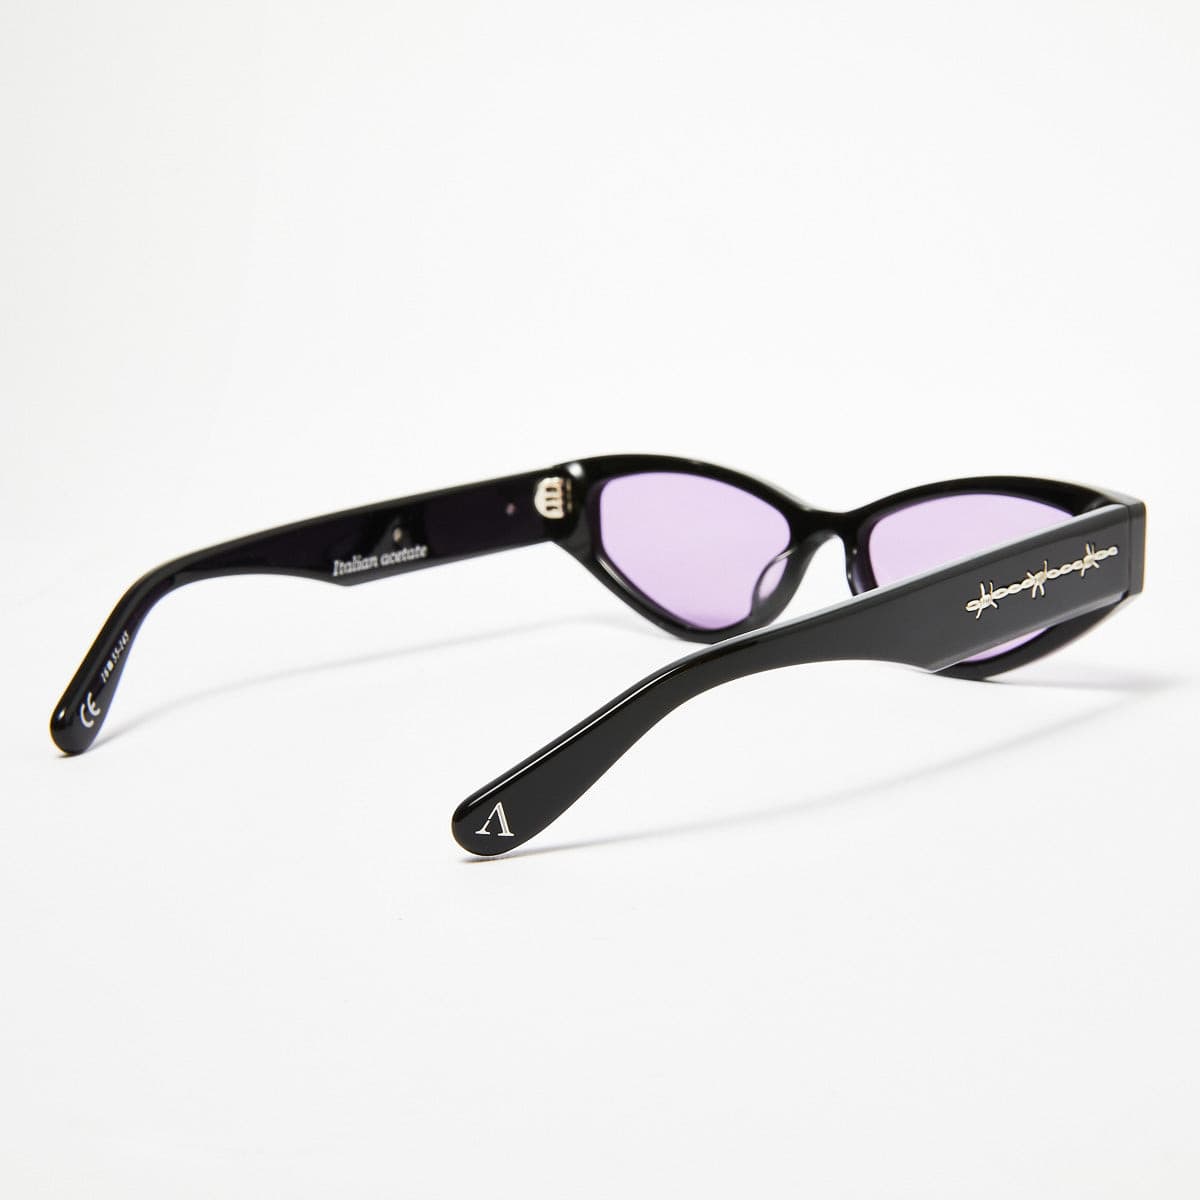 THORNE - Black Polished Frames / Purple Lens ŁEOIDE